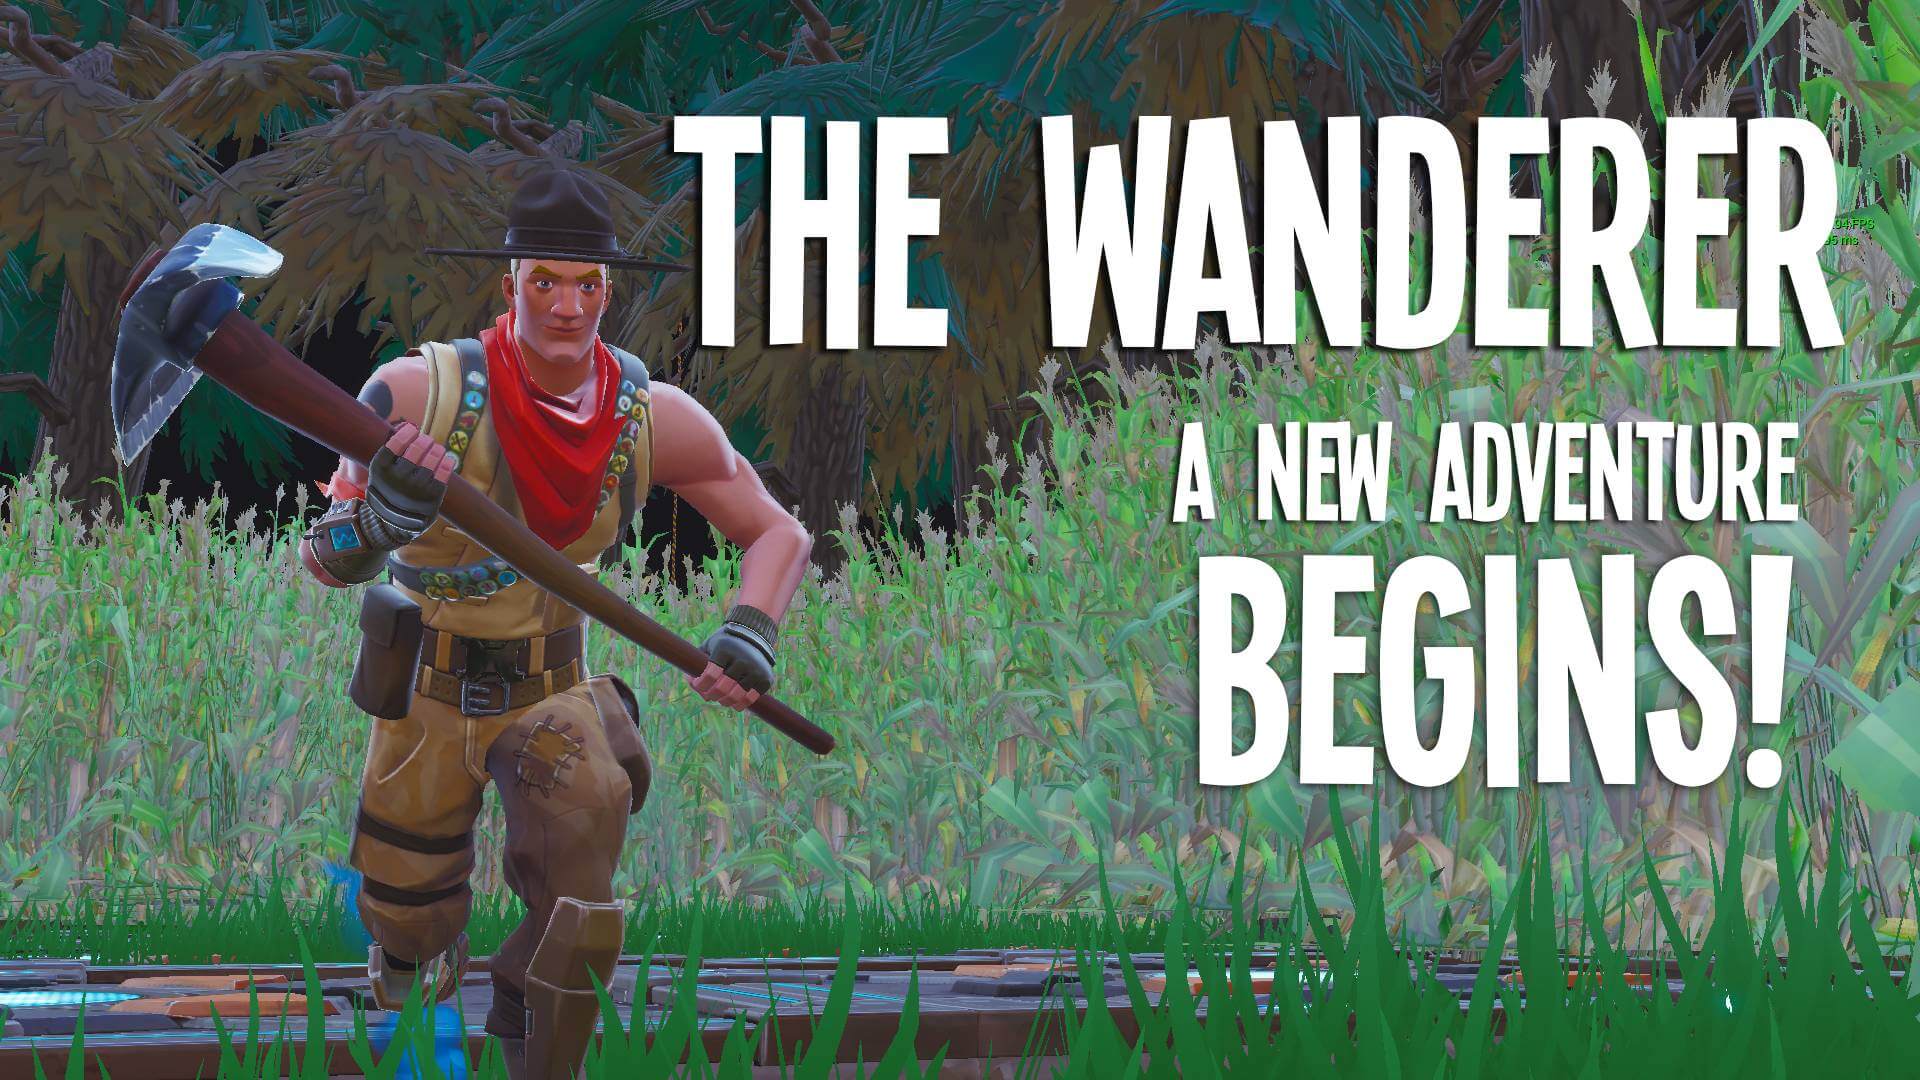 THE WANDERER: A NEW ADVENTURE BEGINS!!